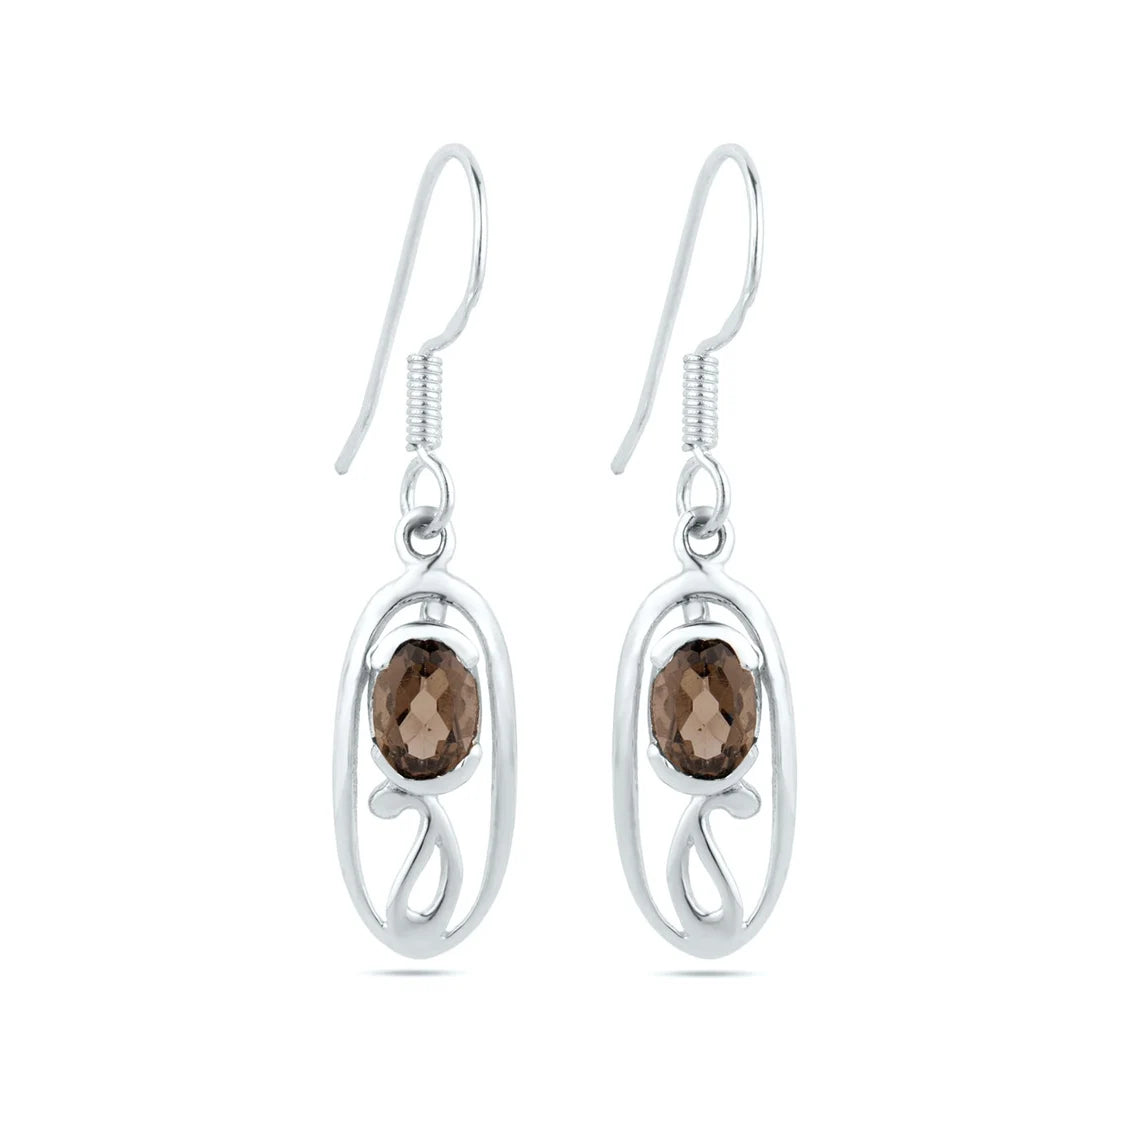 Smoky Quartz Gemstone earrings, 925 Sterling Silver Smoky Earrings, Brown Gemstone Silver Earrings, Smoky Topaz Jewelry, Gift For Her